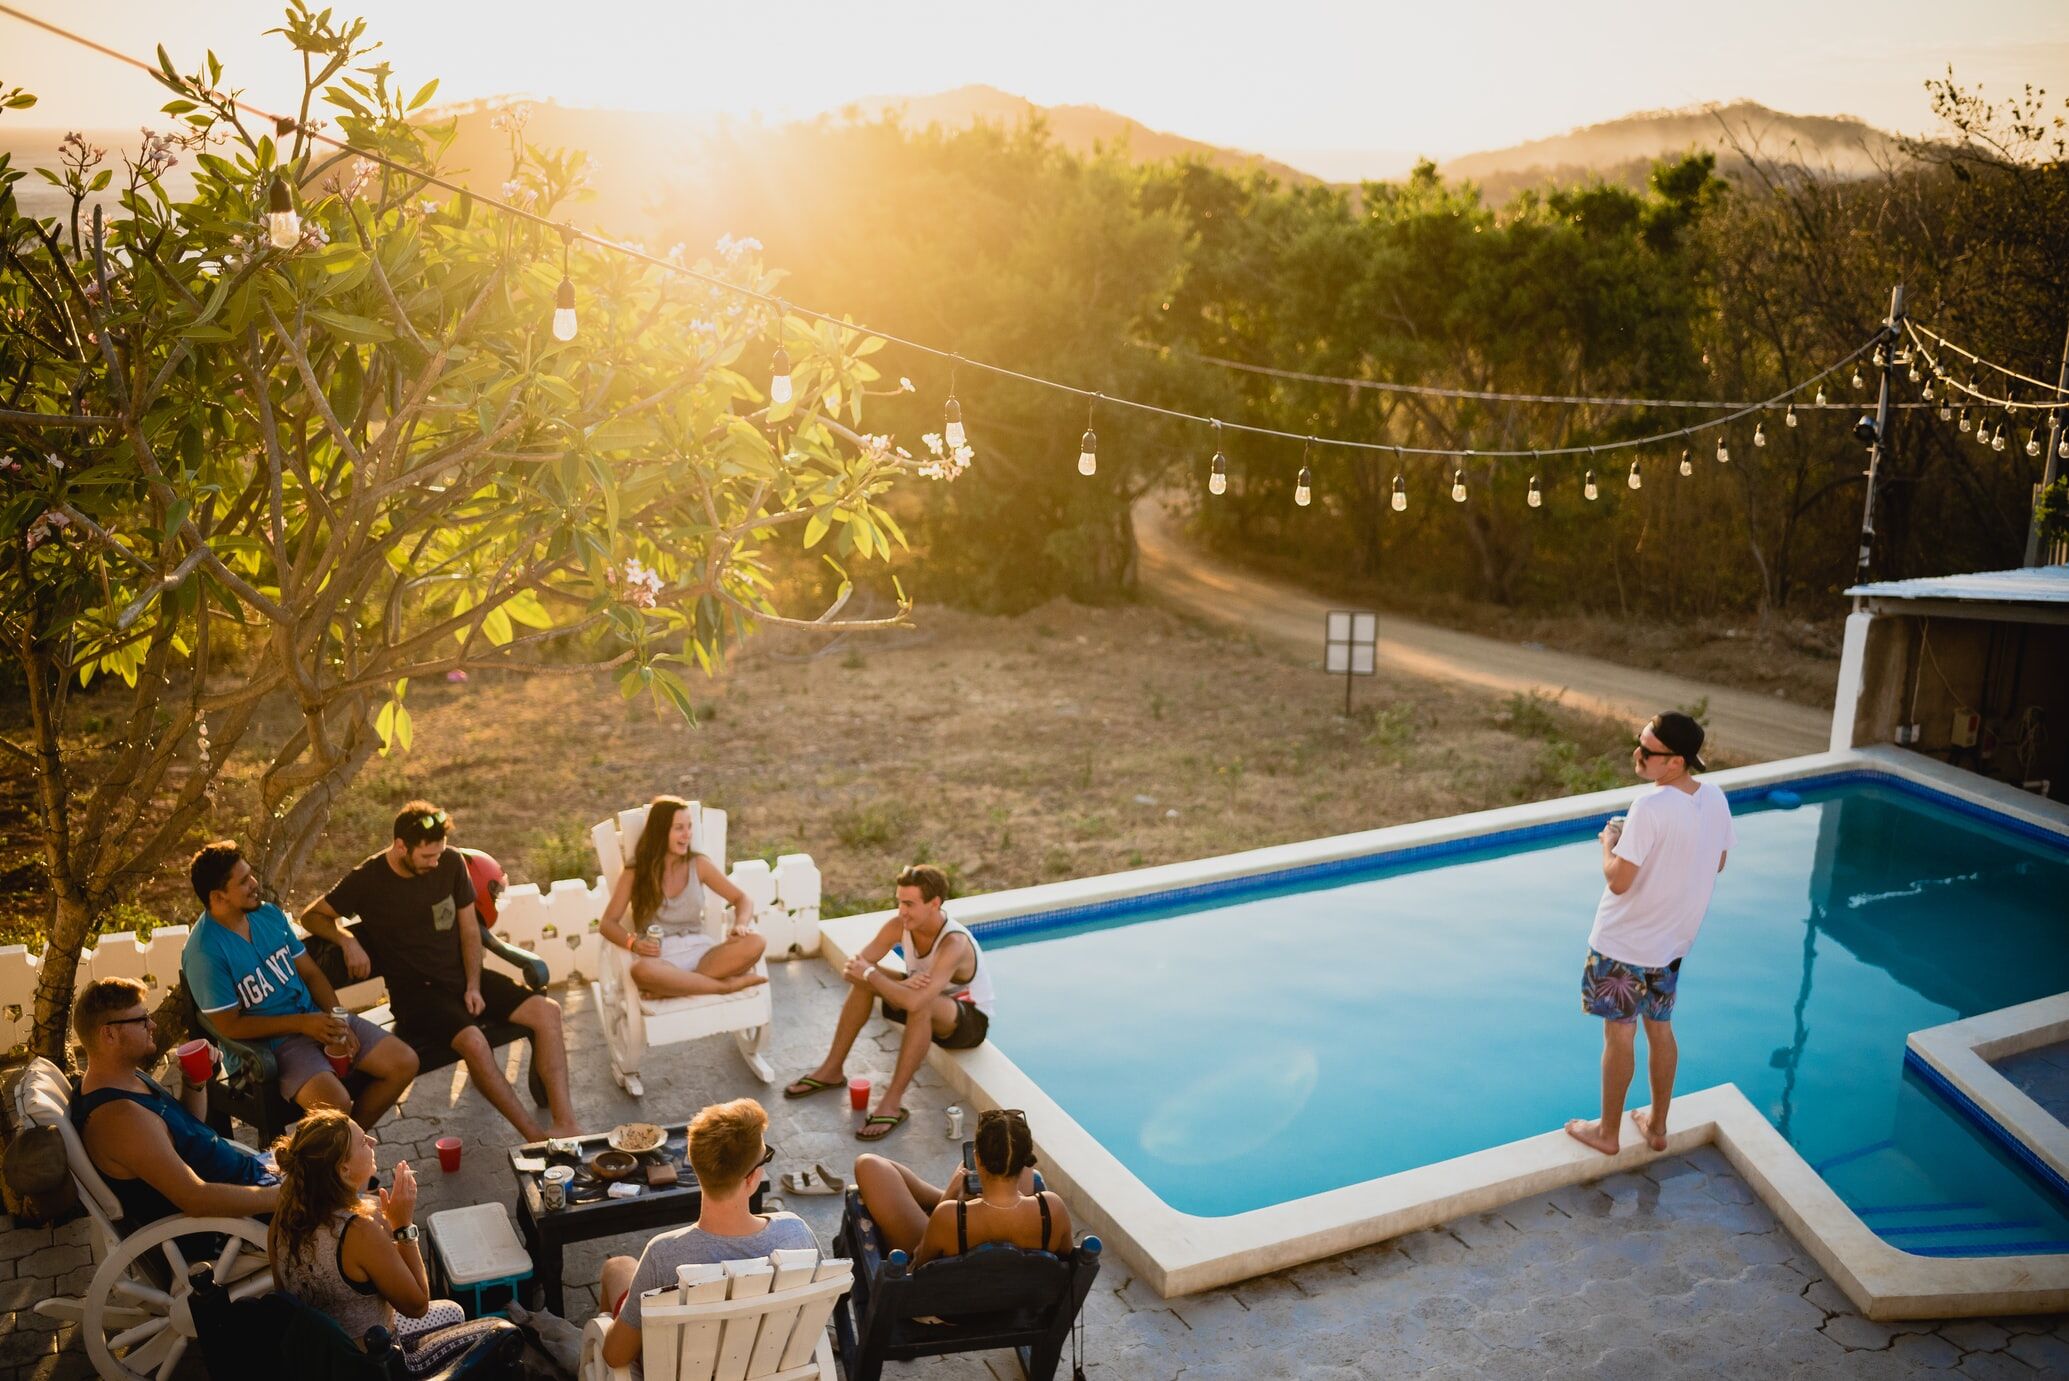 Backyard pool area to host Coachella themed party